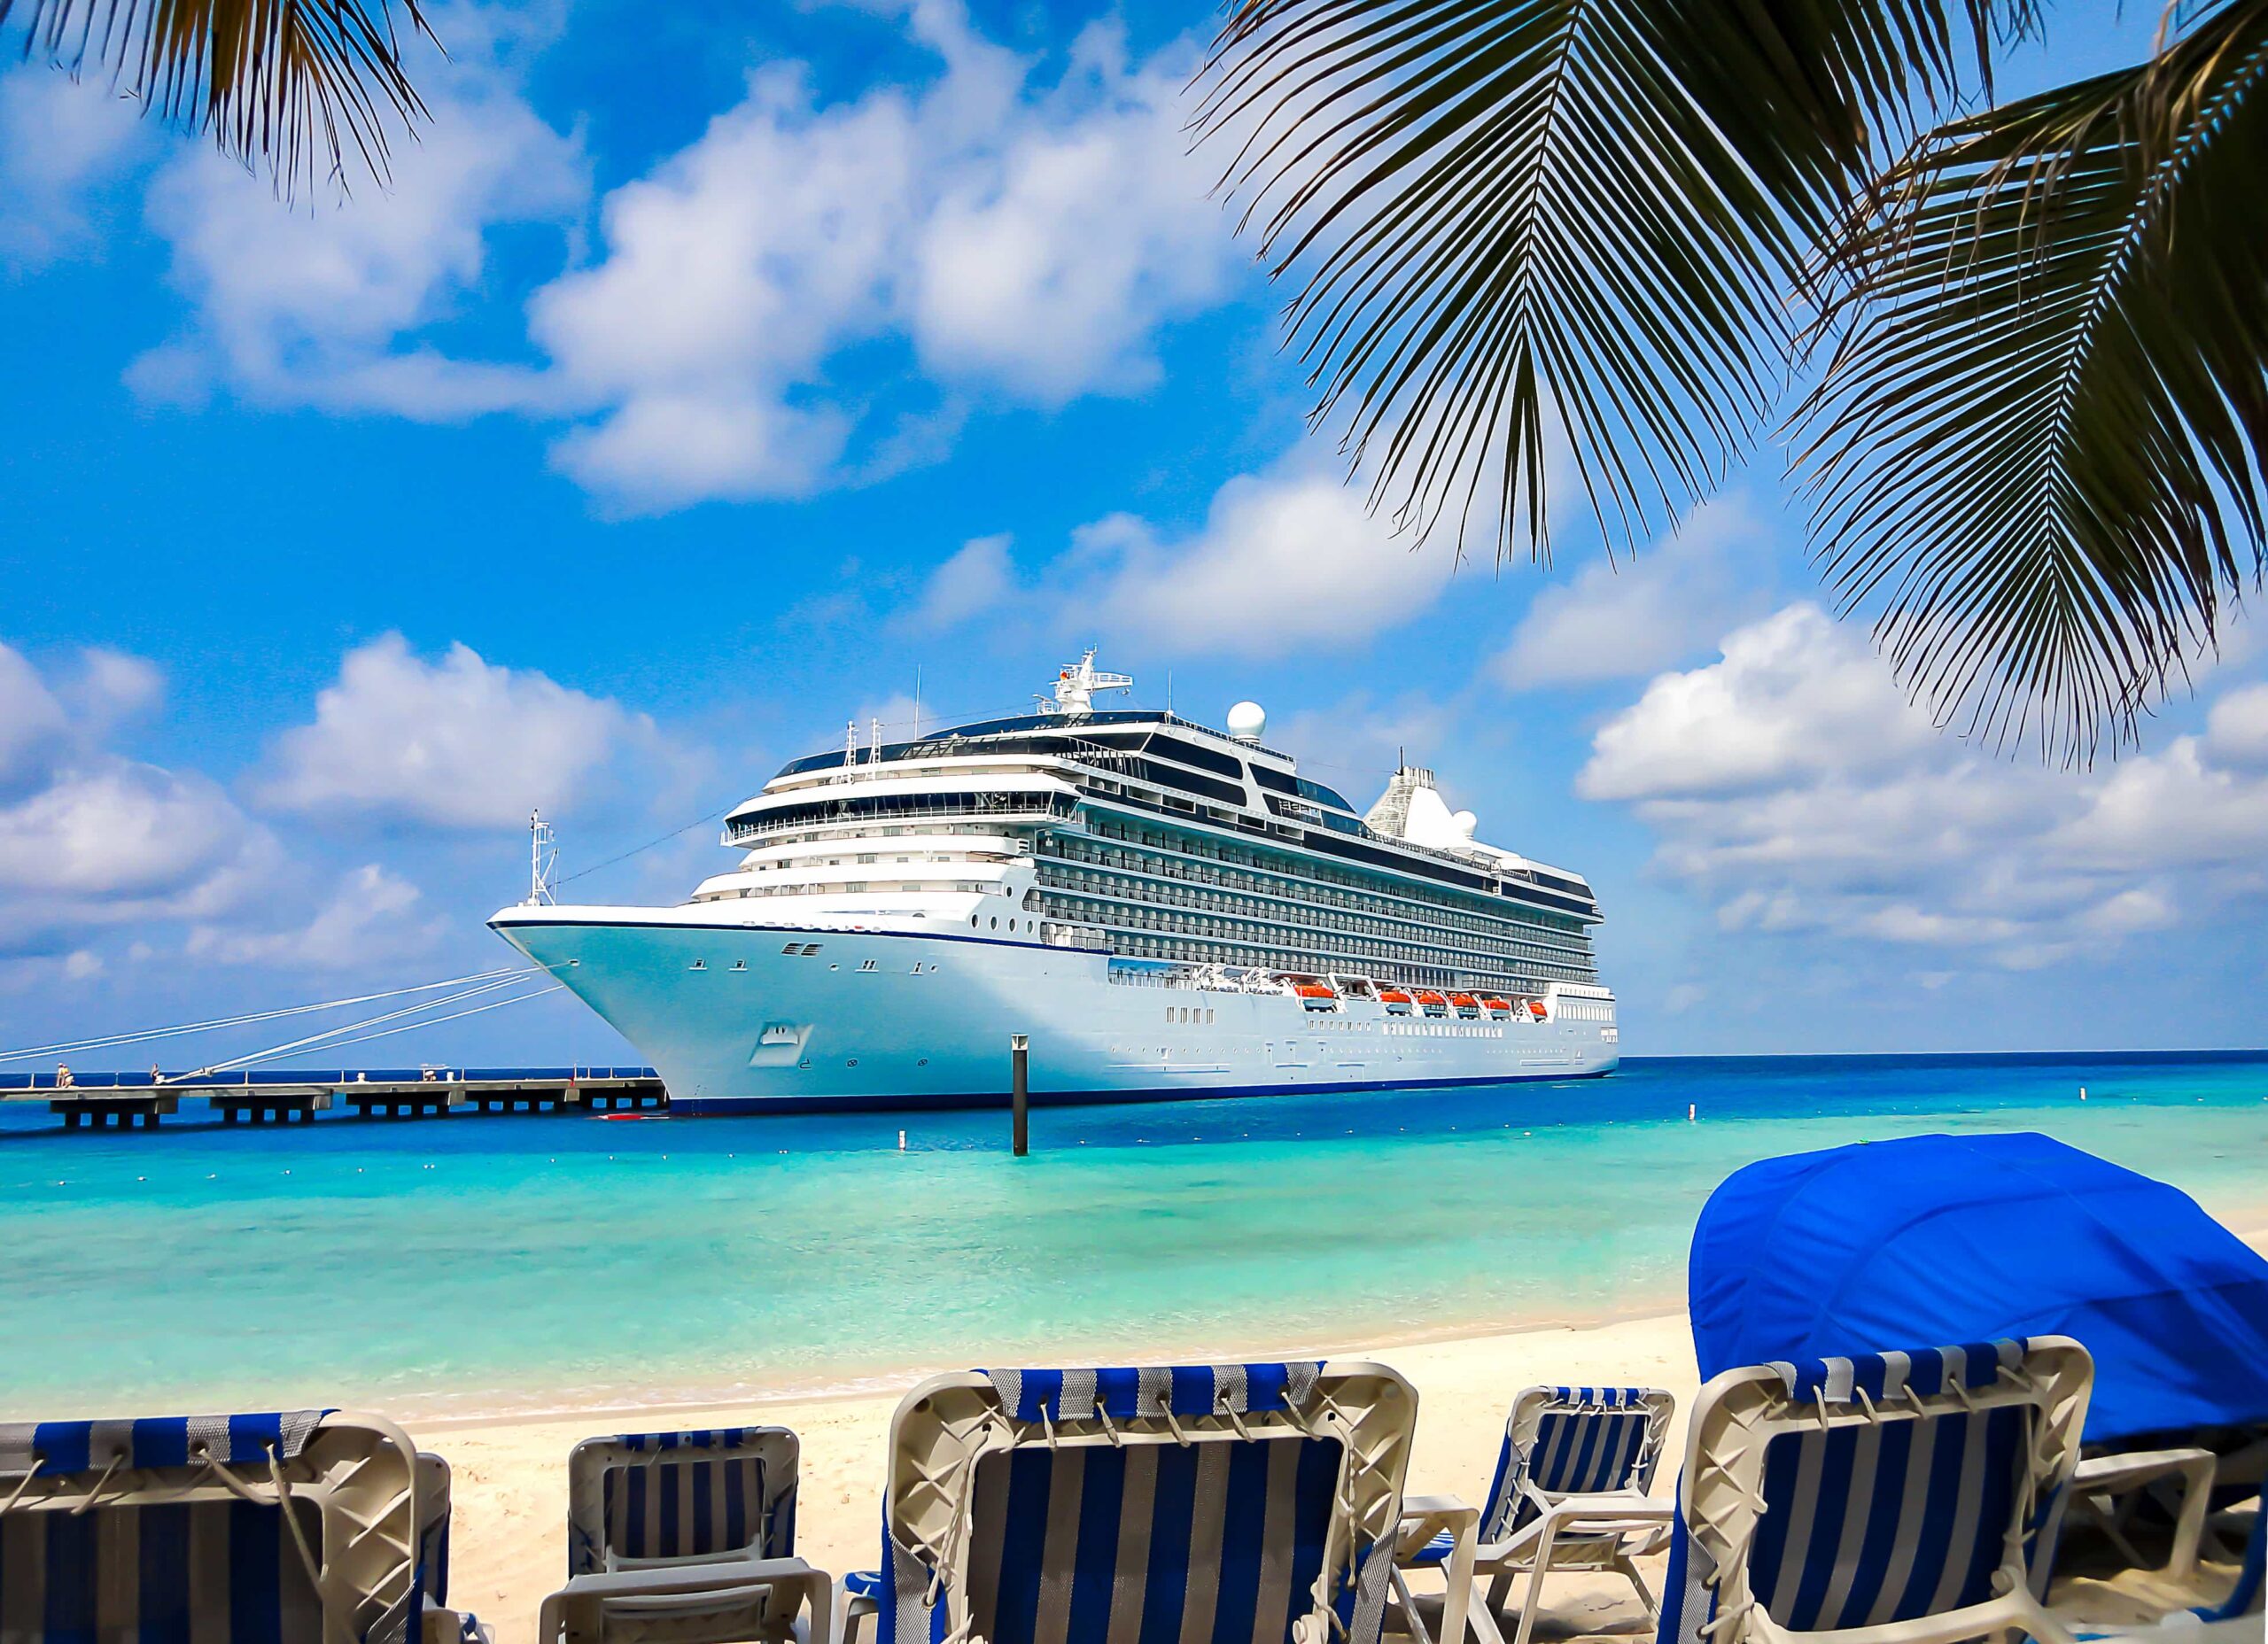 A cruise ship in the Caribbean. Australia's cruise ships